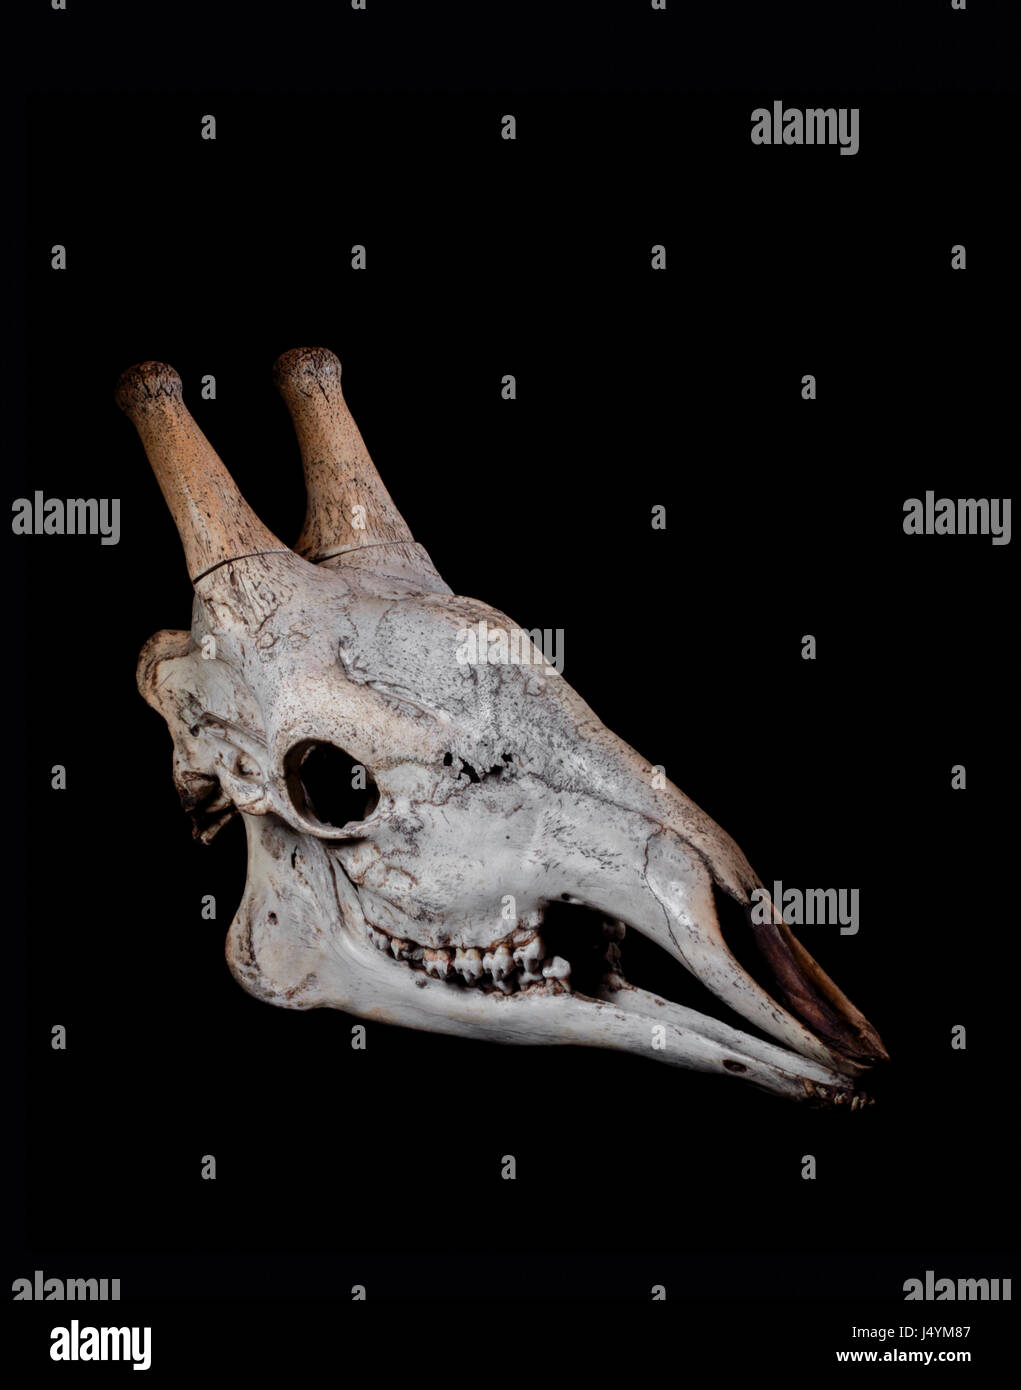 A Giraffe Skull, not a Replica, against a Black Background Stock Photo